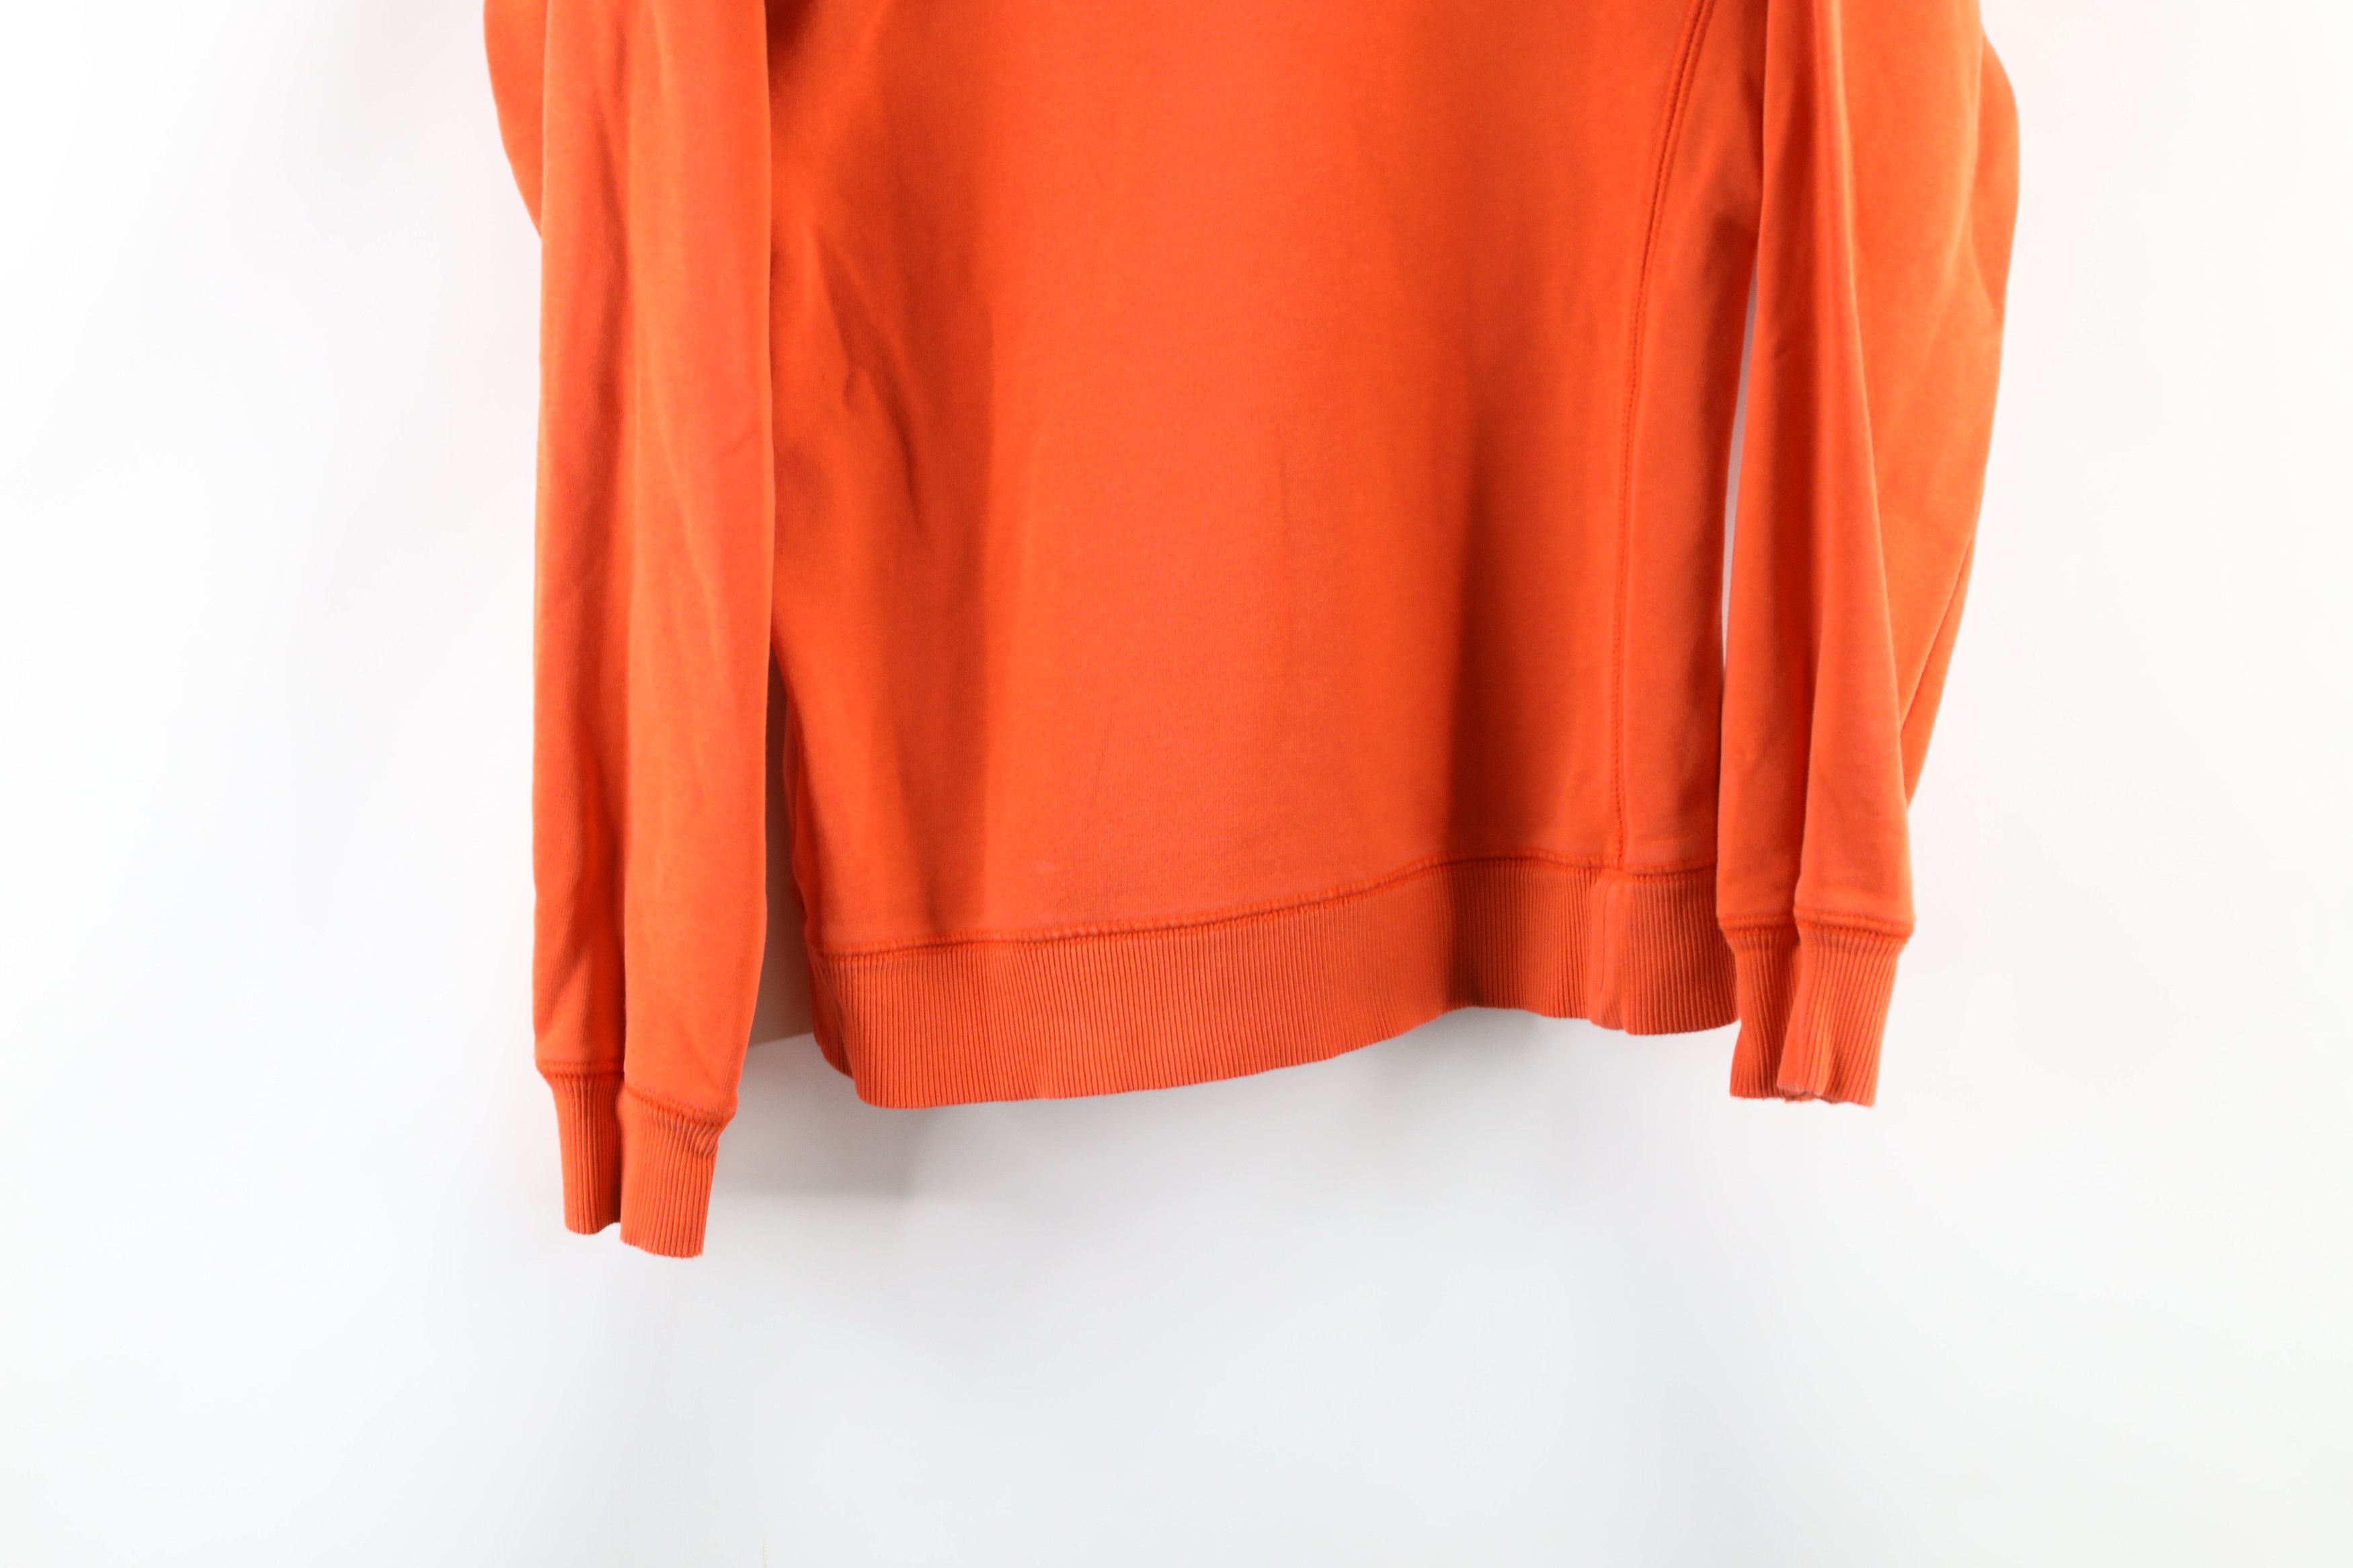 Nike Vintage Nike Travis Scott Swoosh Hoodie Sweatshirt Orange Size S / US 4 / IT 40 - 8 Preview